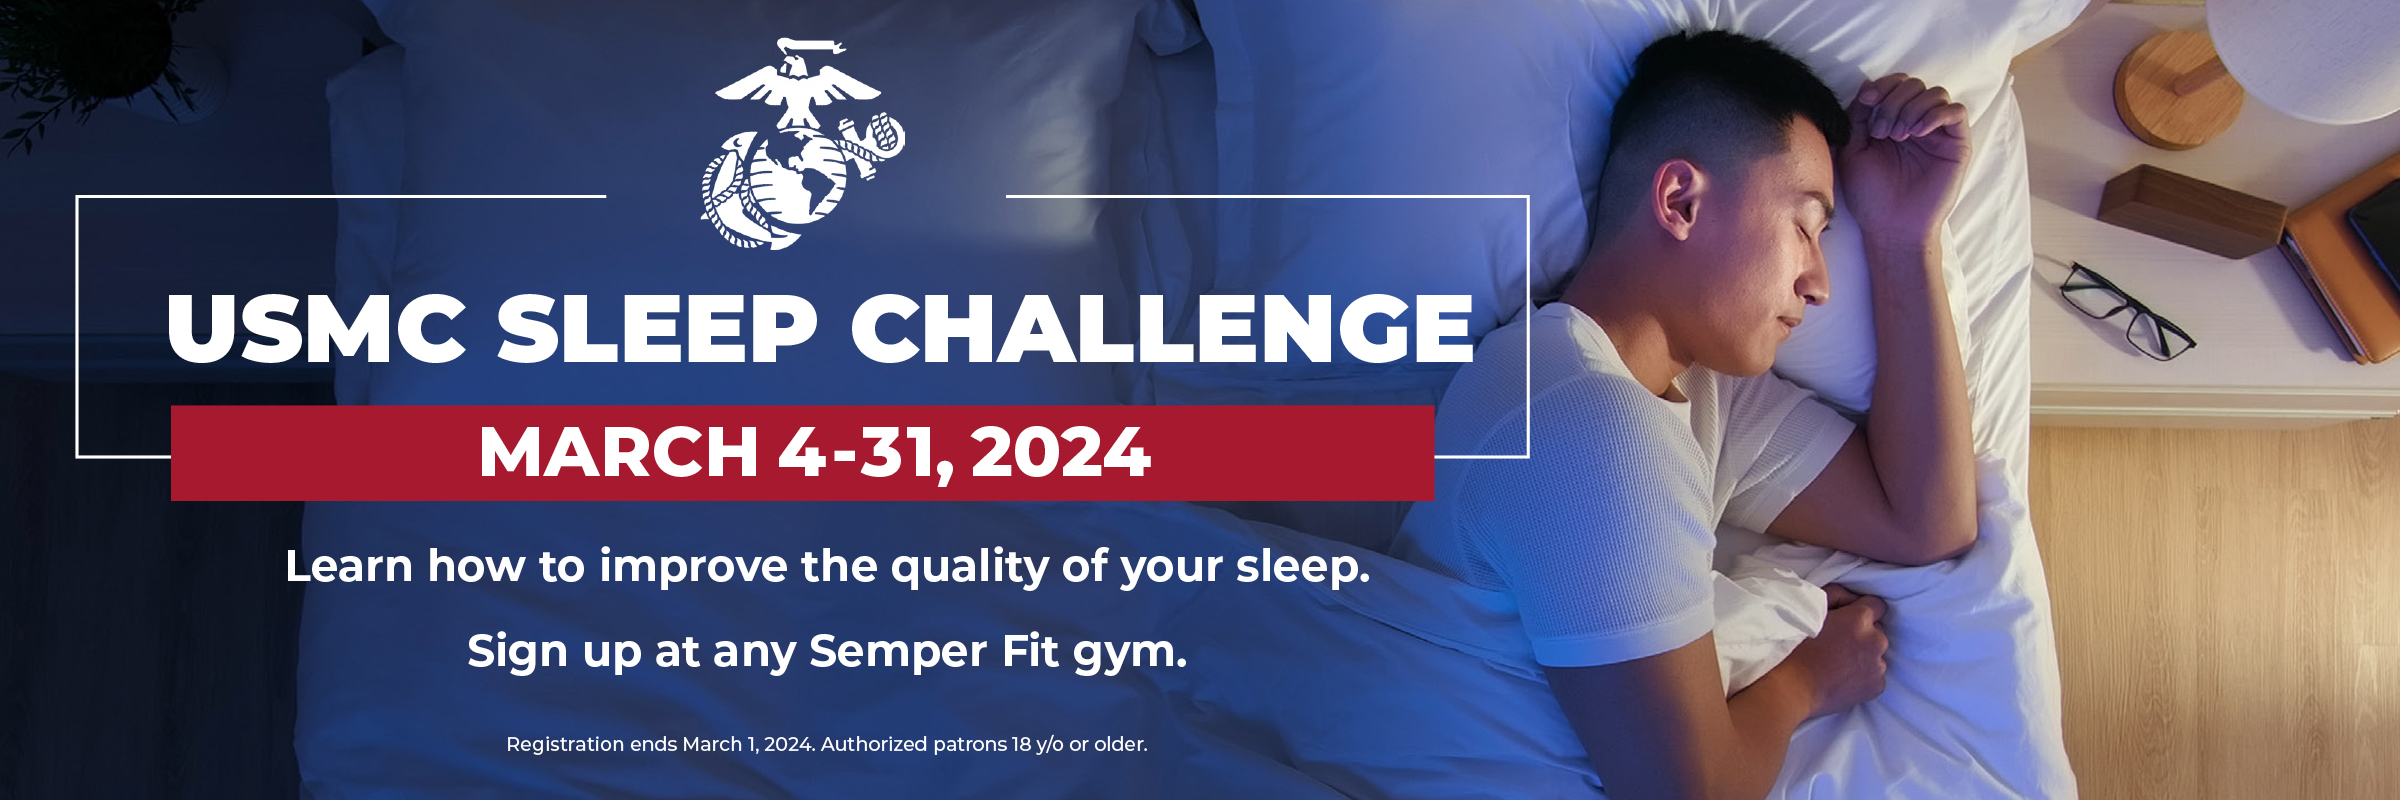 2024 USMC Sleep Challenge 2400x800 web slide.jpg